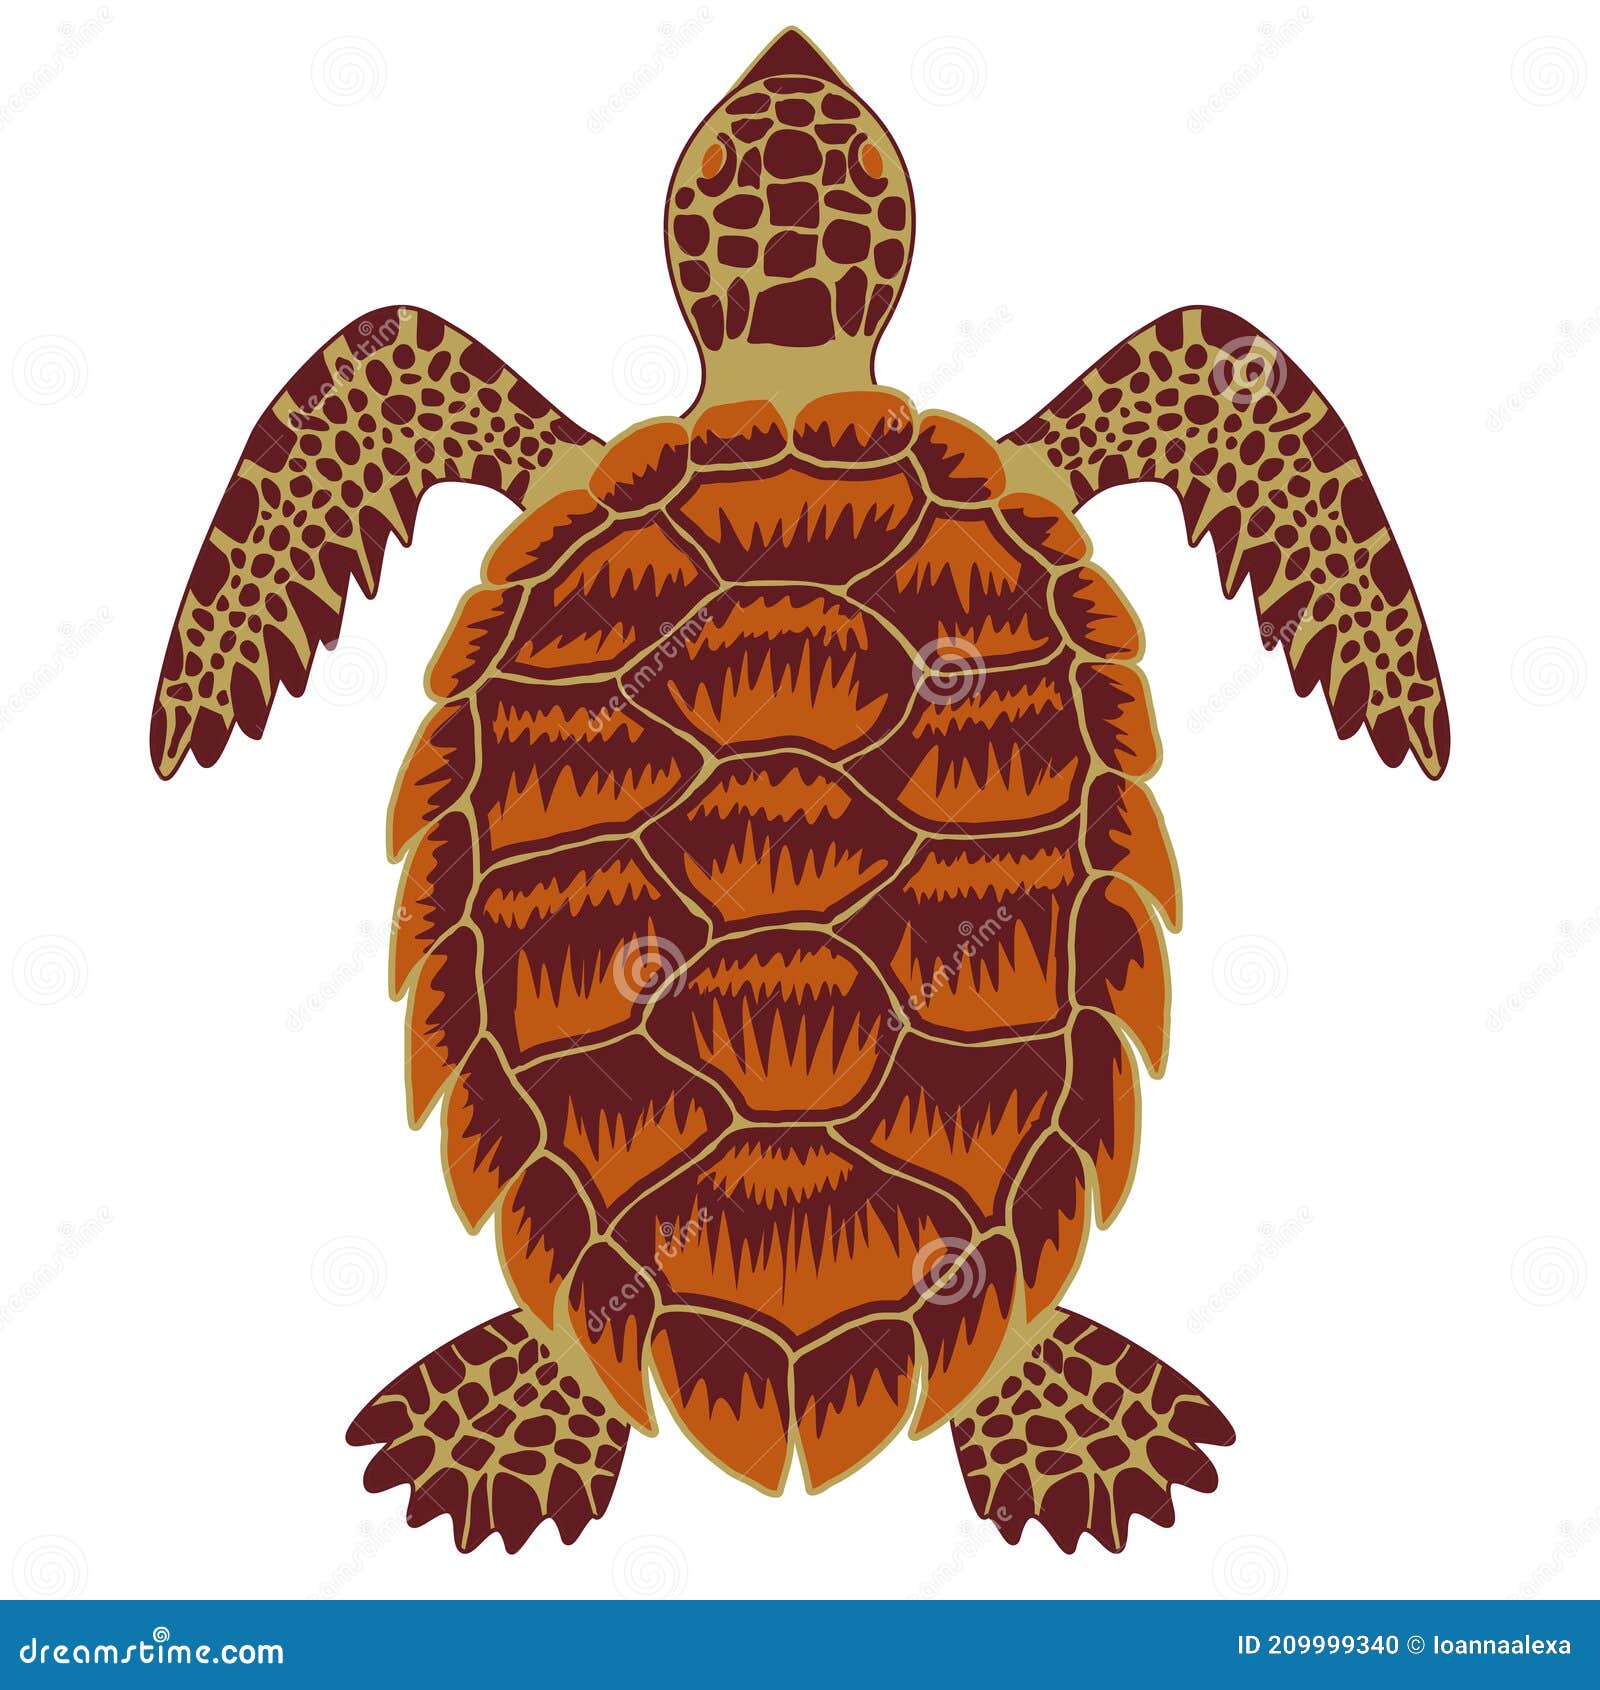 Hawksbill sea turtle